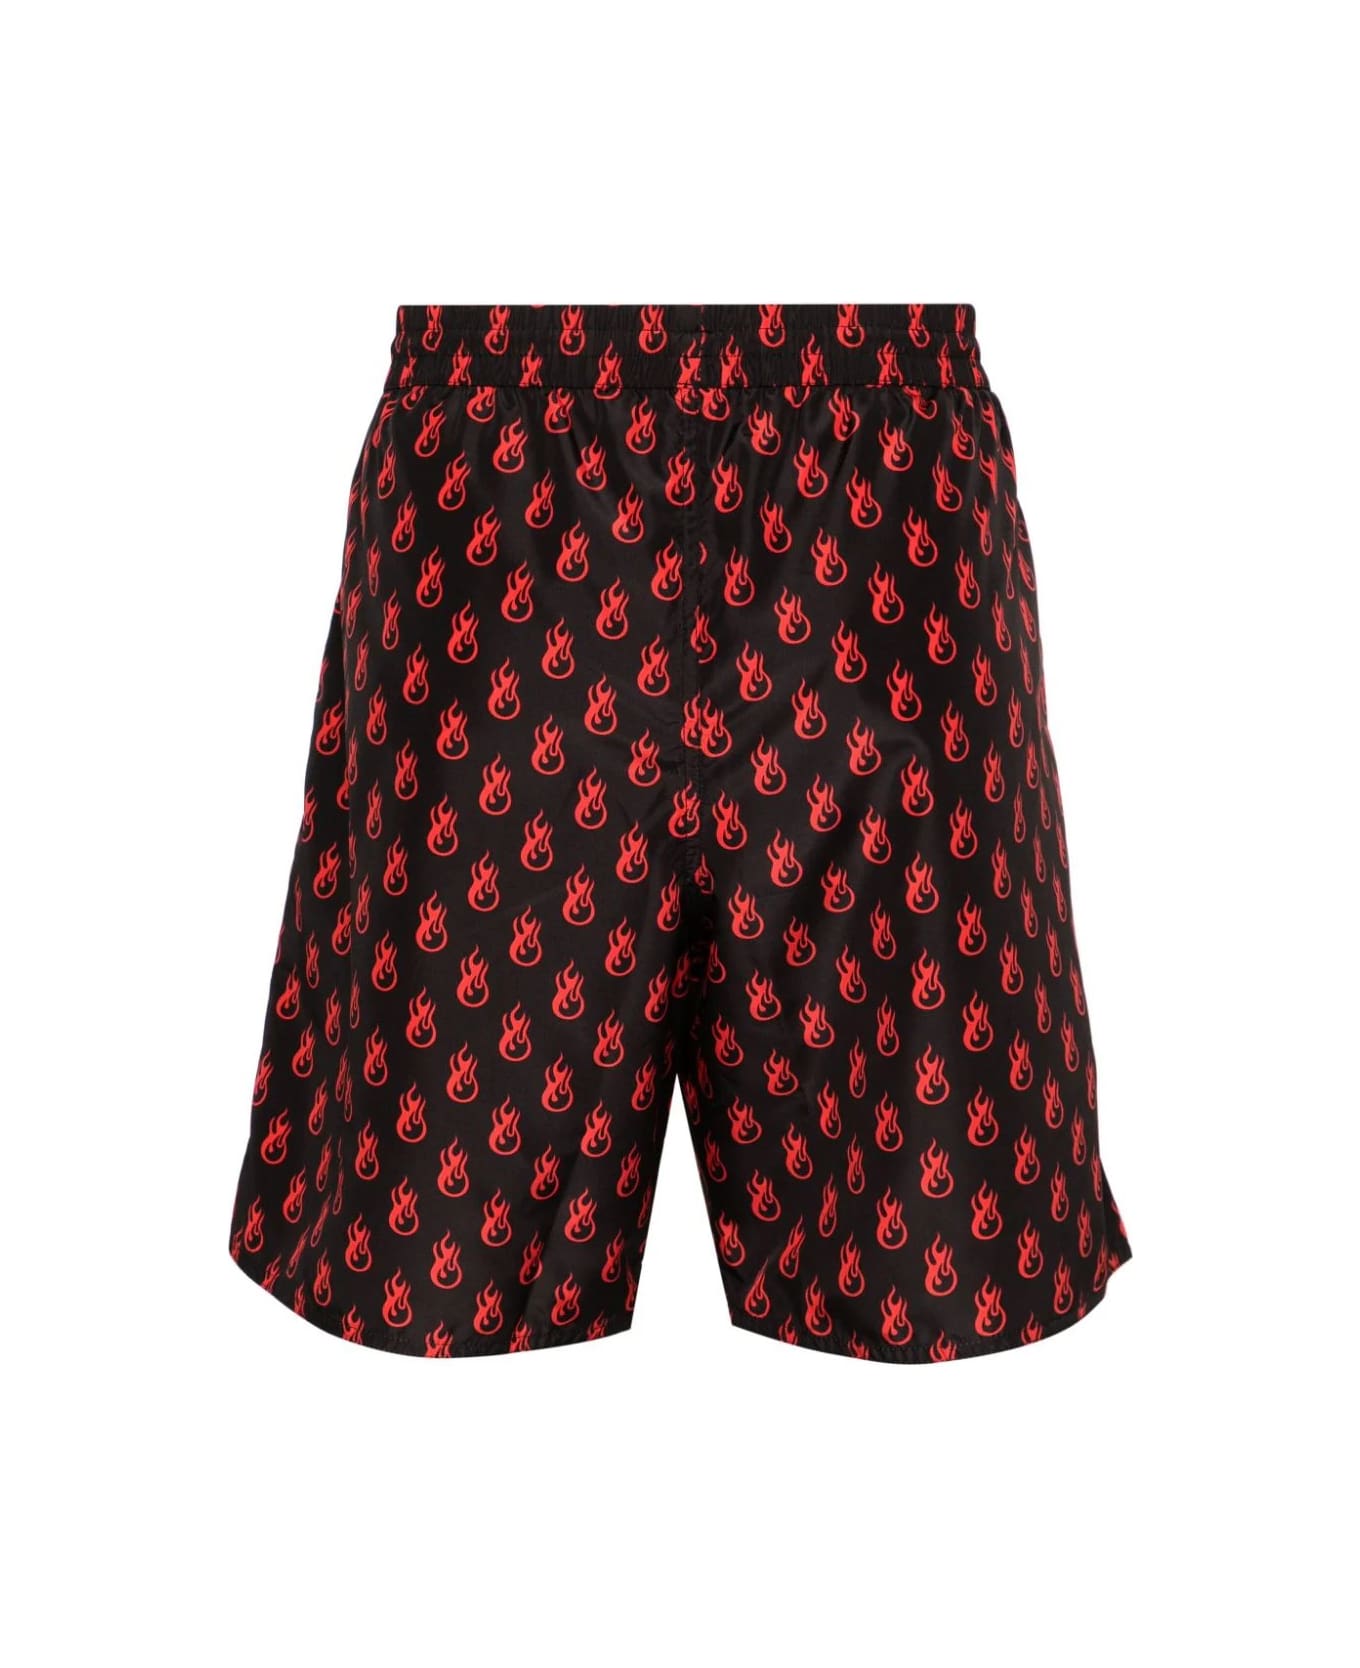 Vision of Super Black Swimwear With Red Flames Pattern - Black スイムトランクス